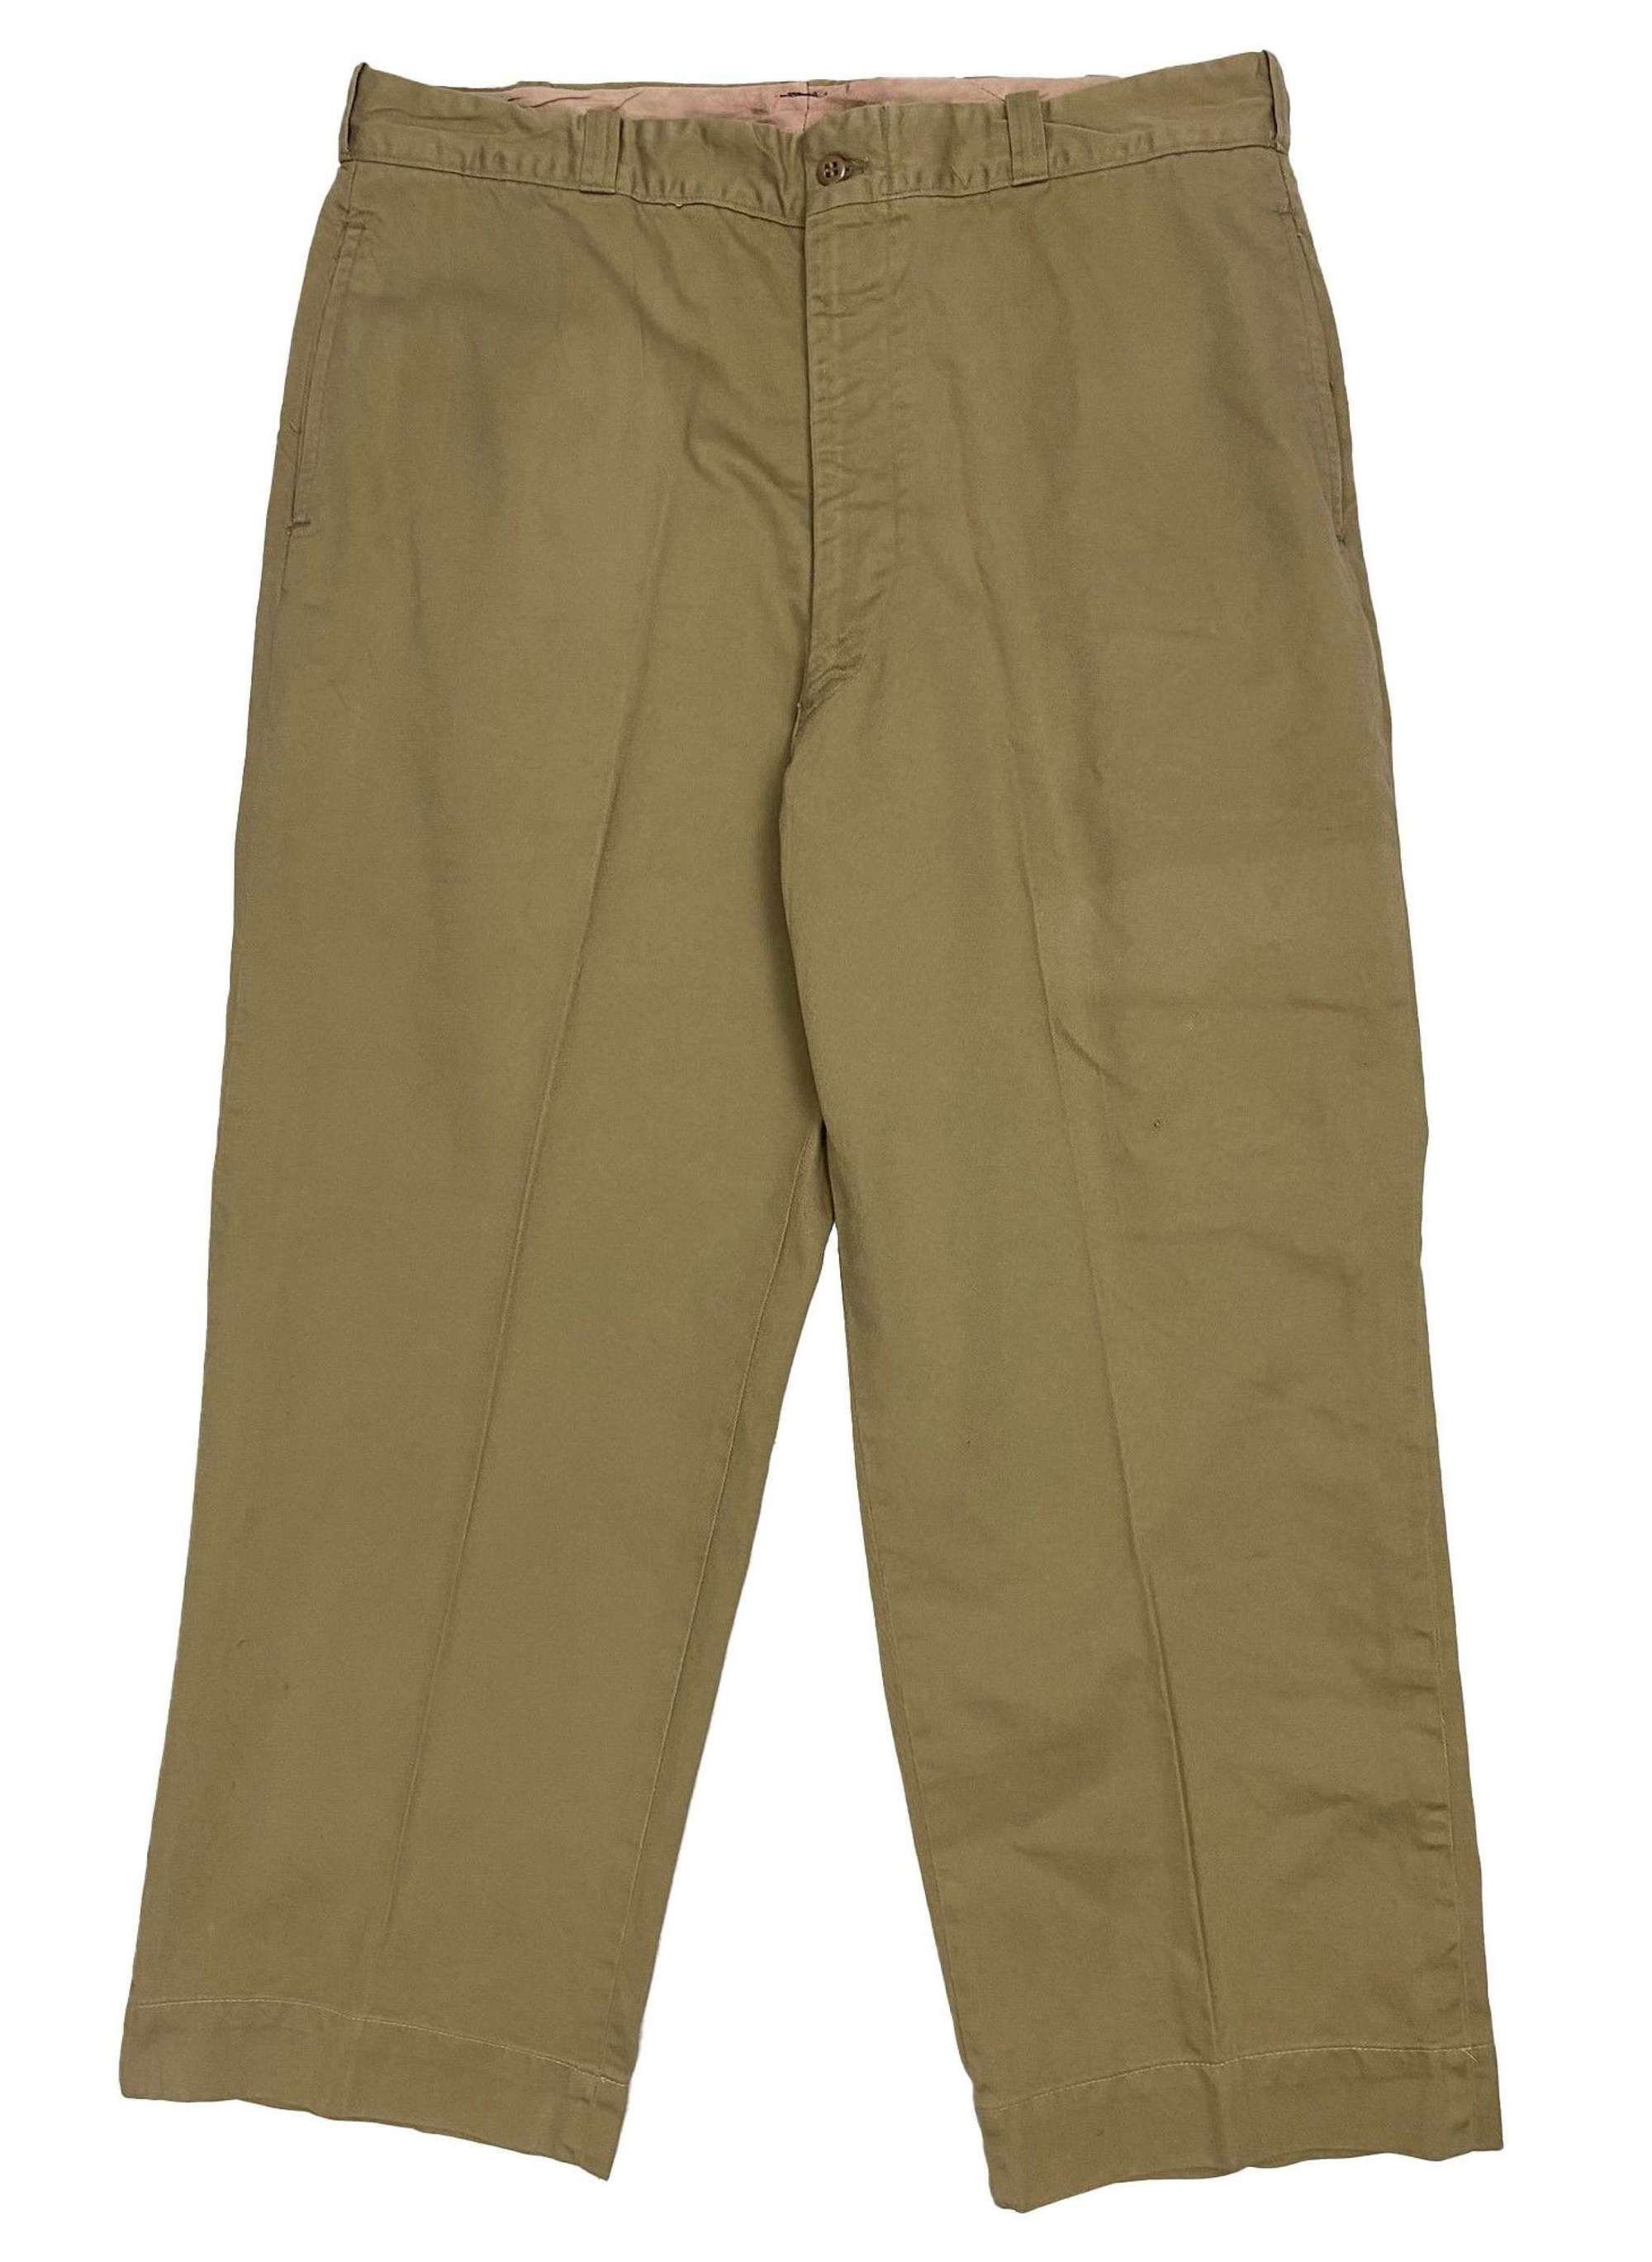 Original 1950s US Army Class B Khaki Trousers